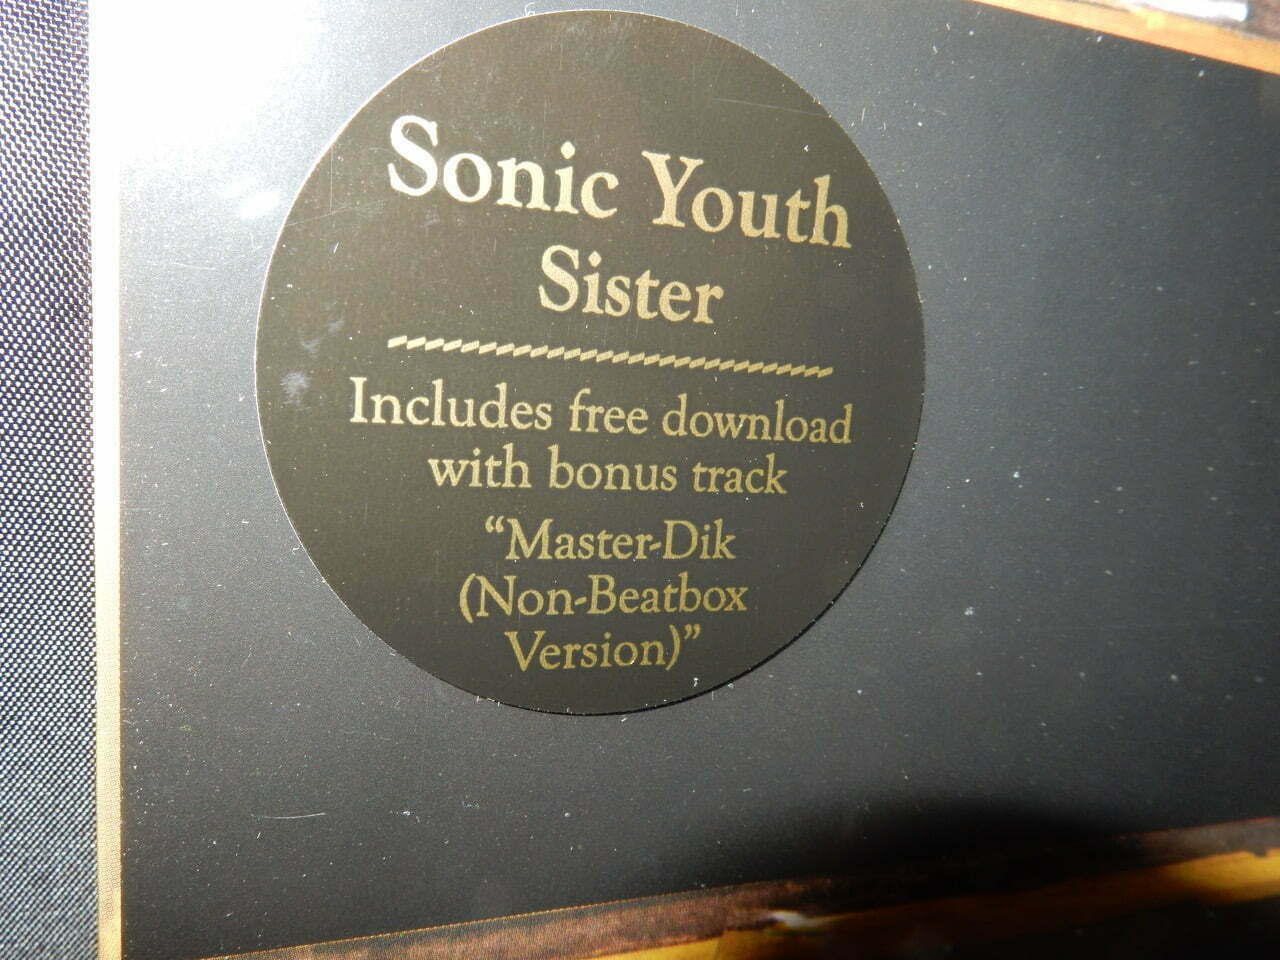 Sonic Youth "Sister" Goofin Records Vinyl LP Reissue - Buy My Comics